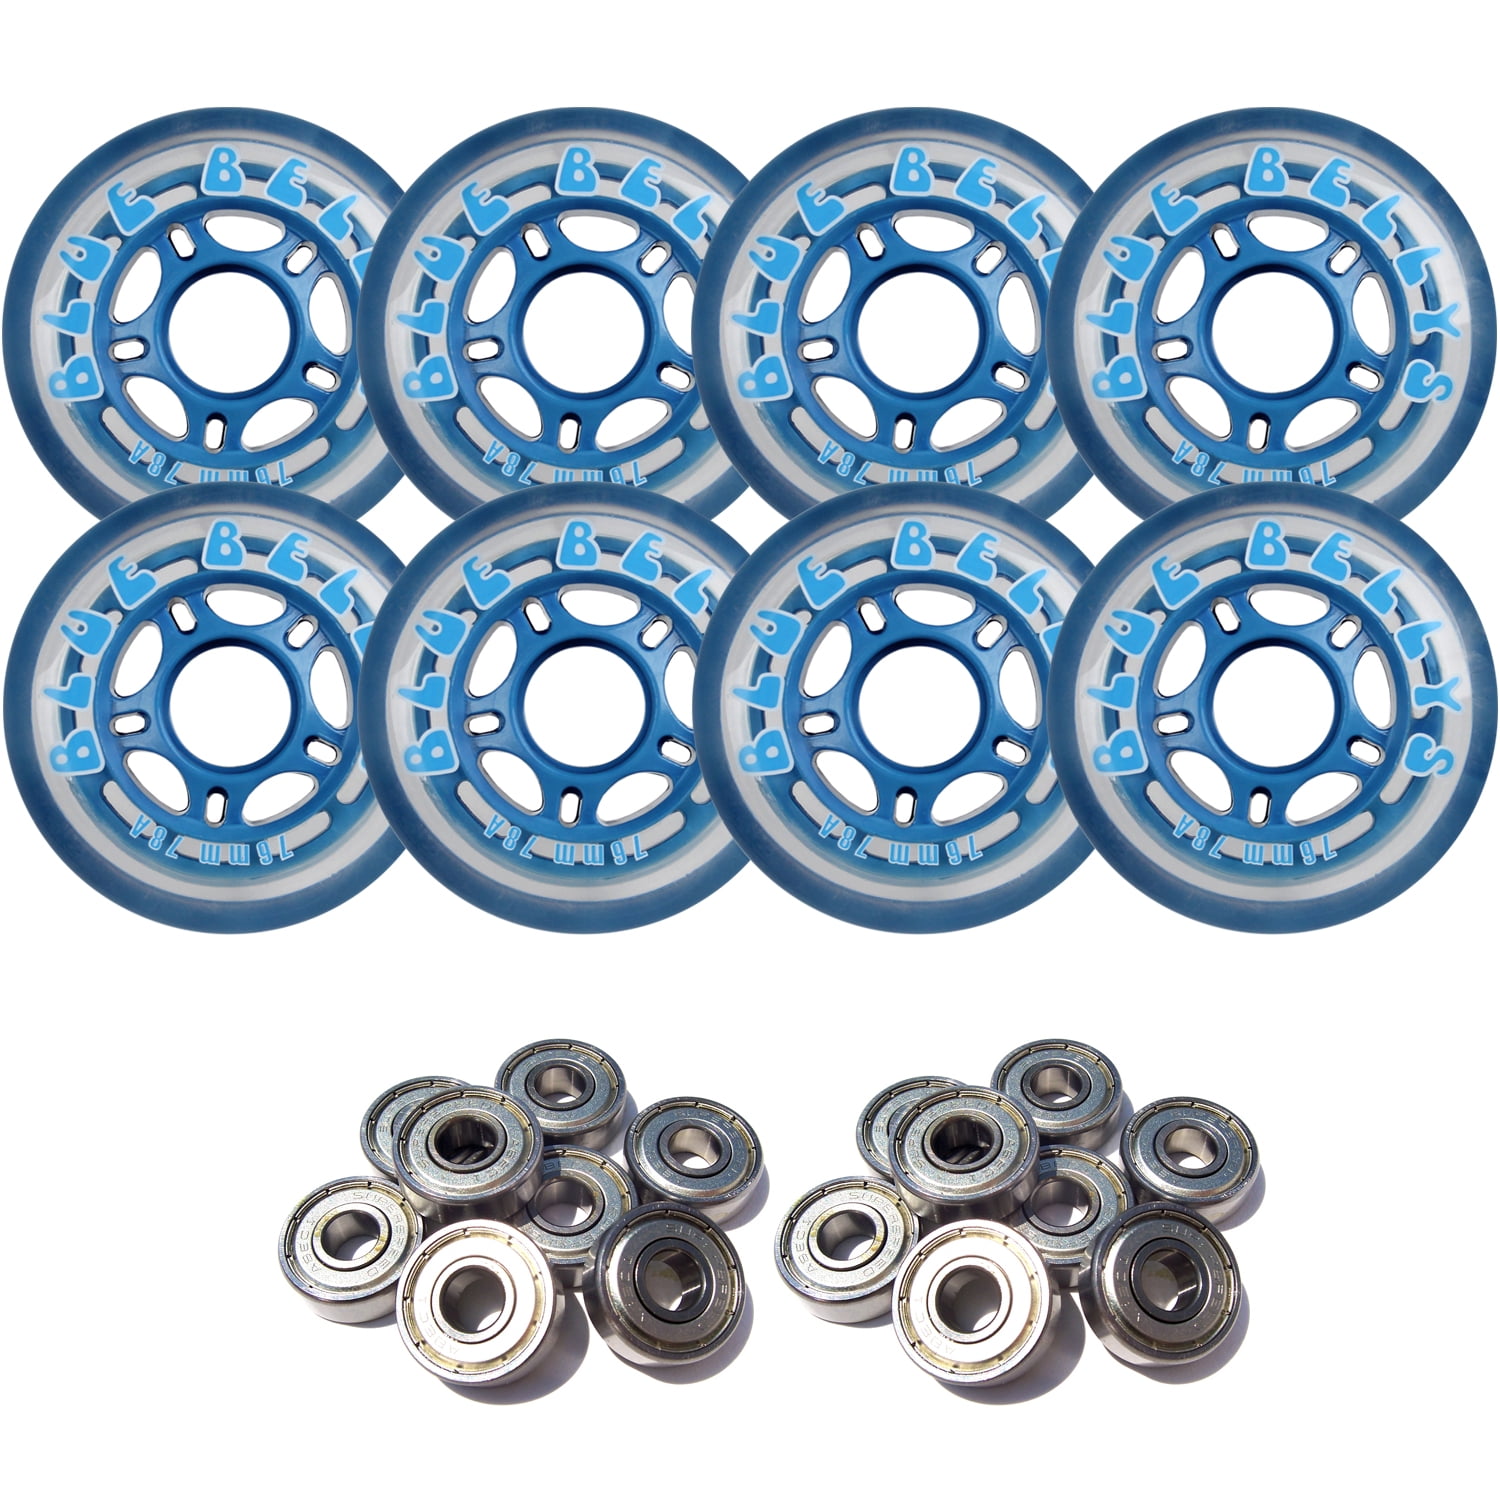 8x Hyper Wheels Track GRABBER BLUE-Sticky-Inliners ROLLER 104 mm 83a 